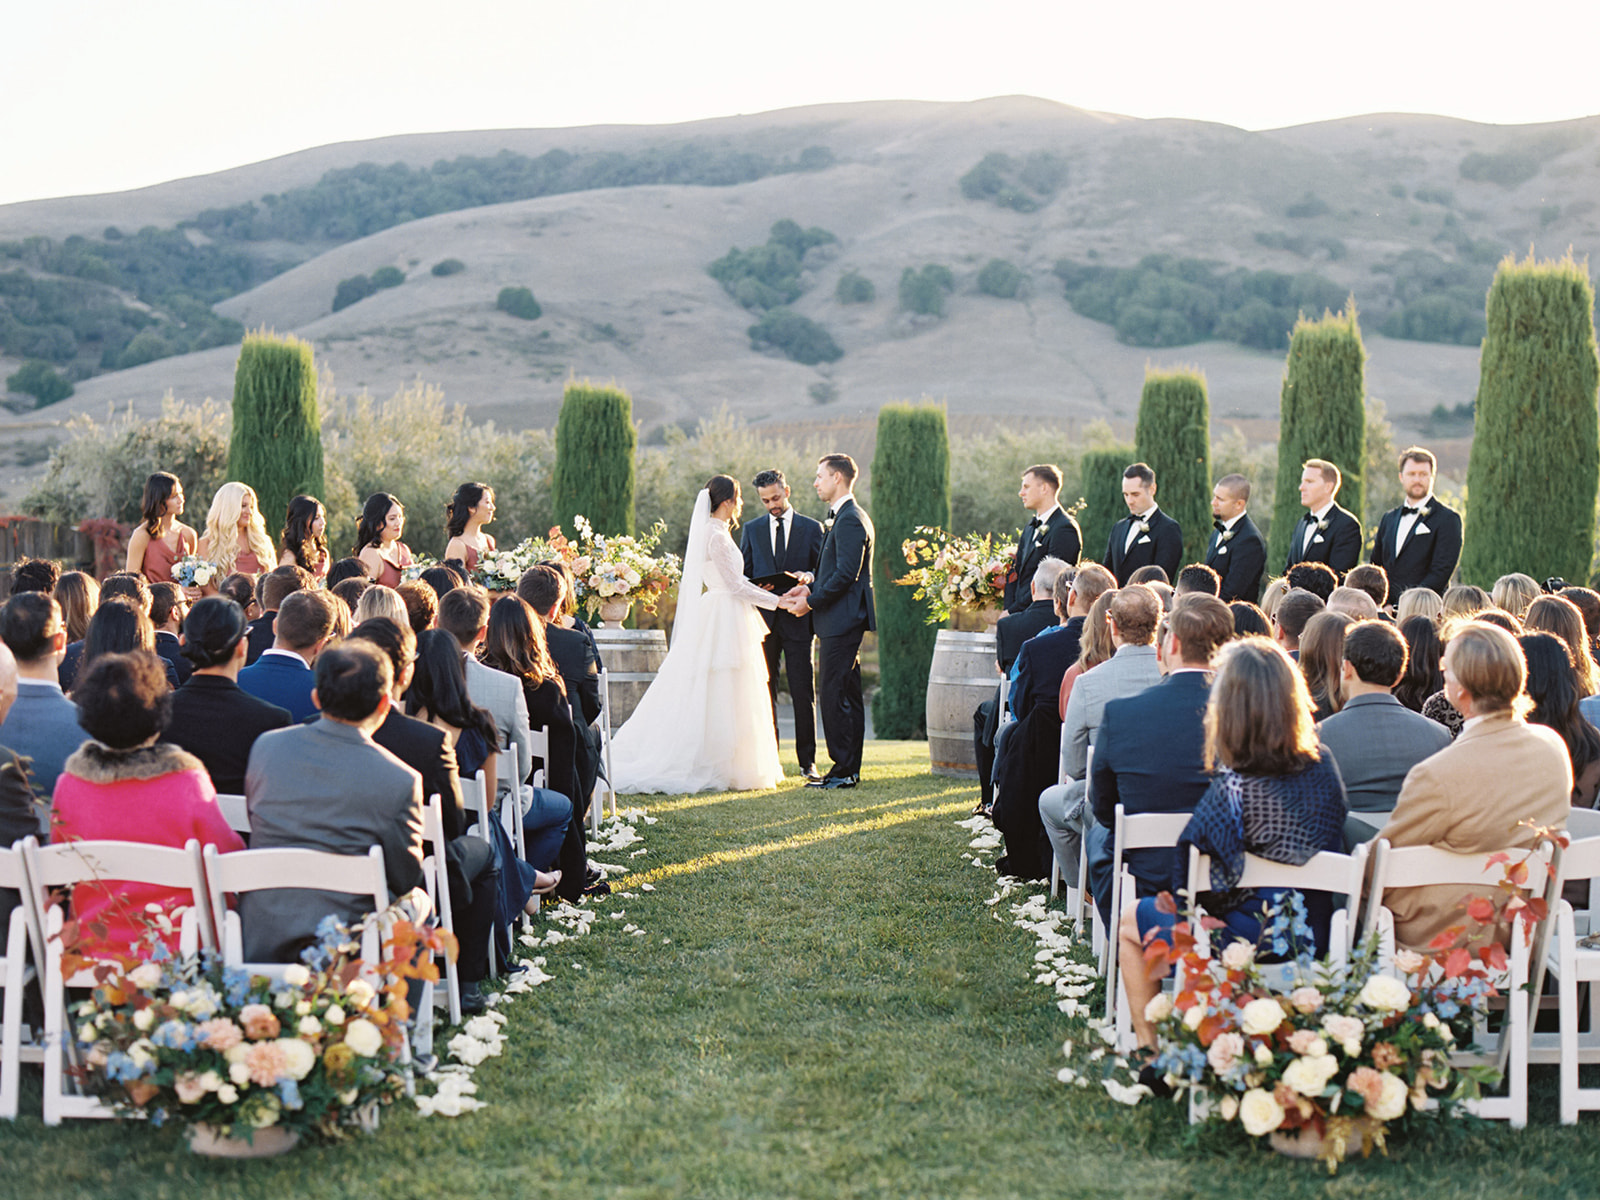 An outdoor fall Viansa Winery wedding ceremony in Sonoma, California